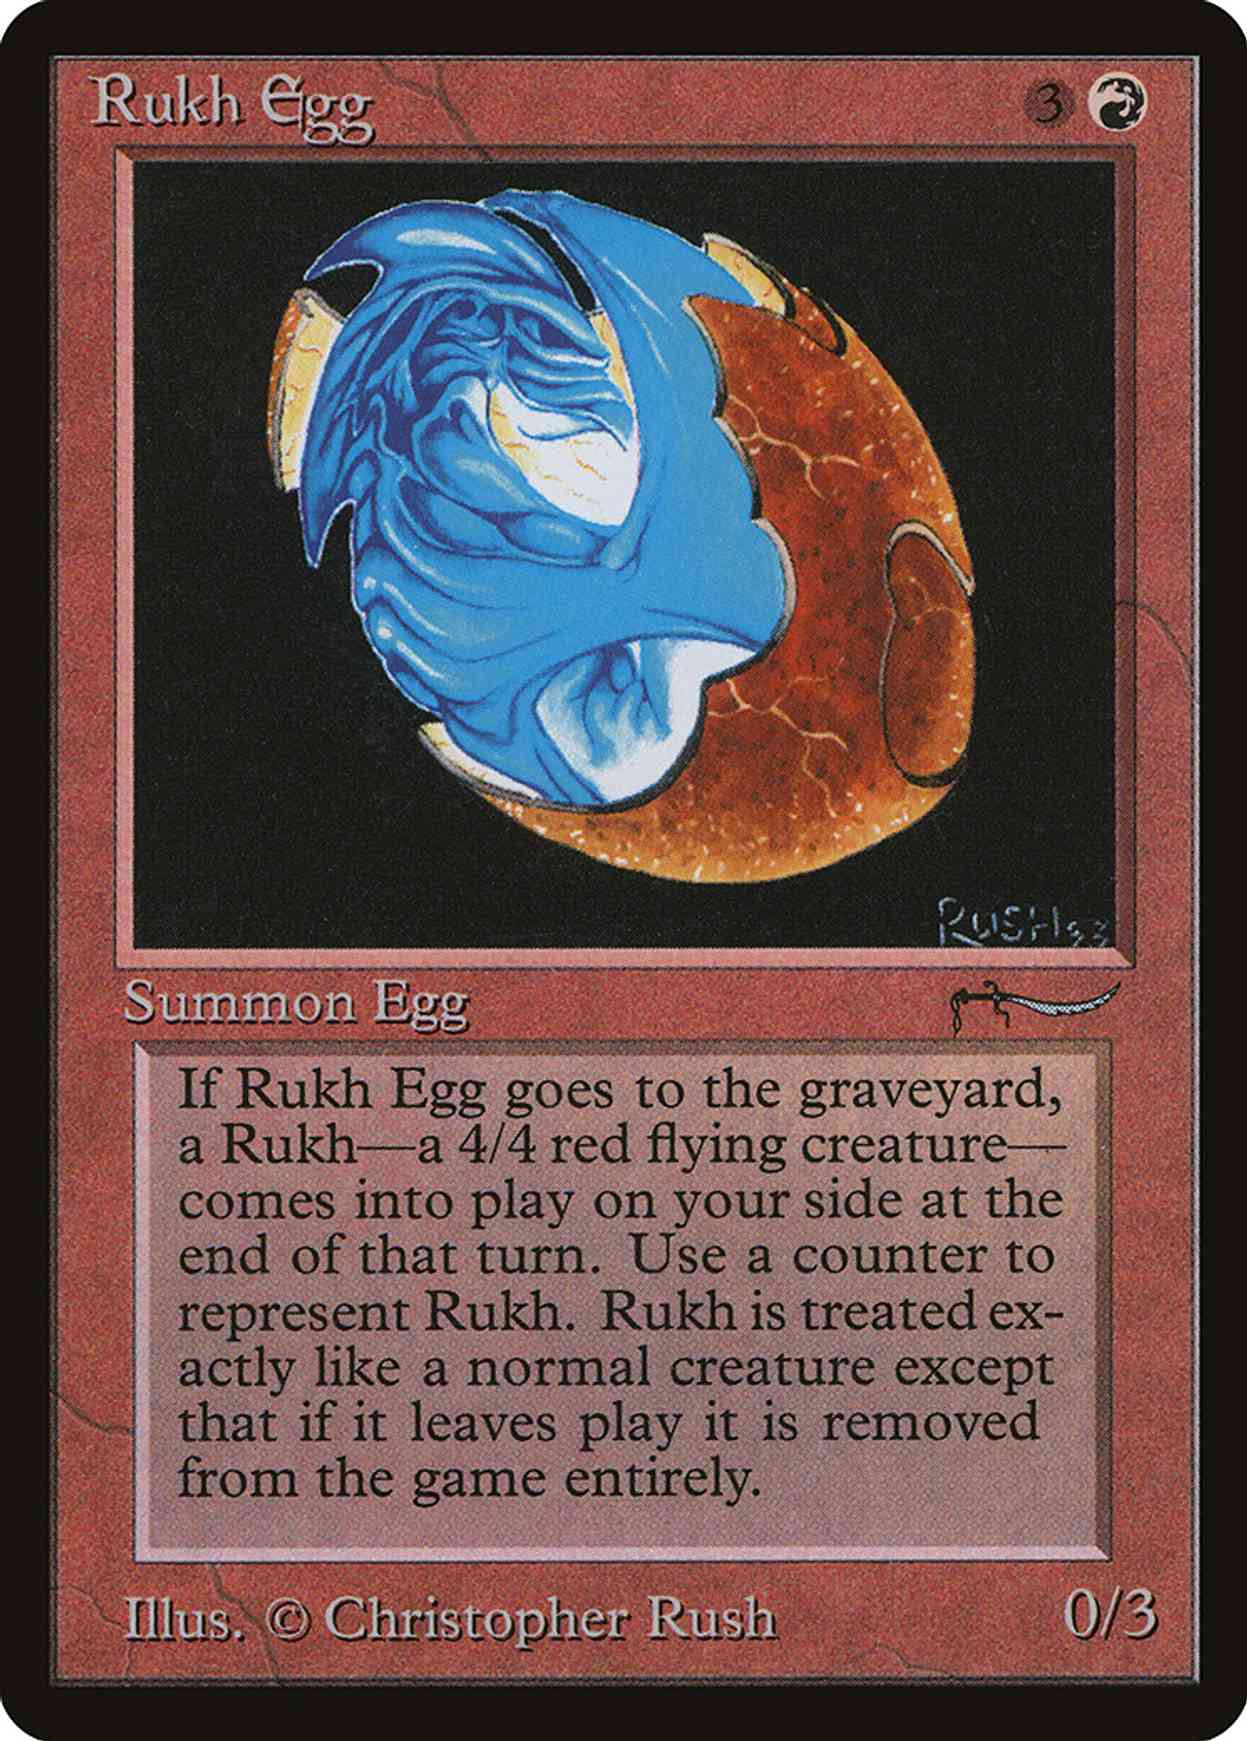 Rukh Egg magic card front